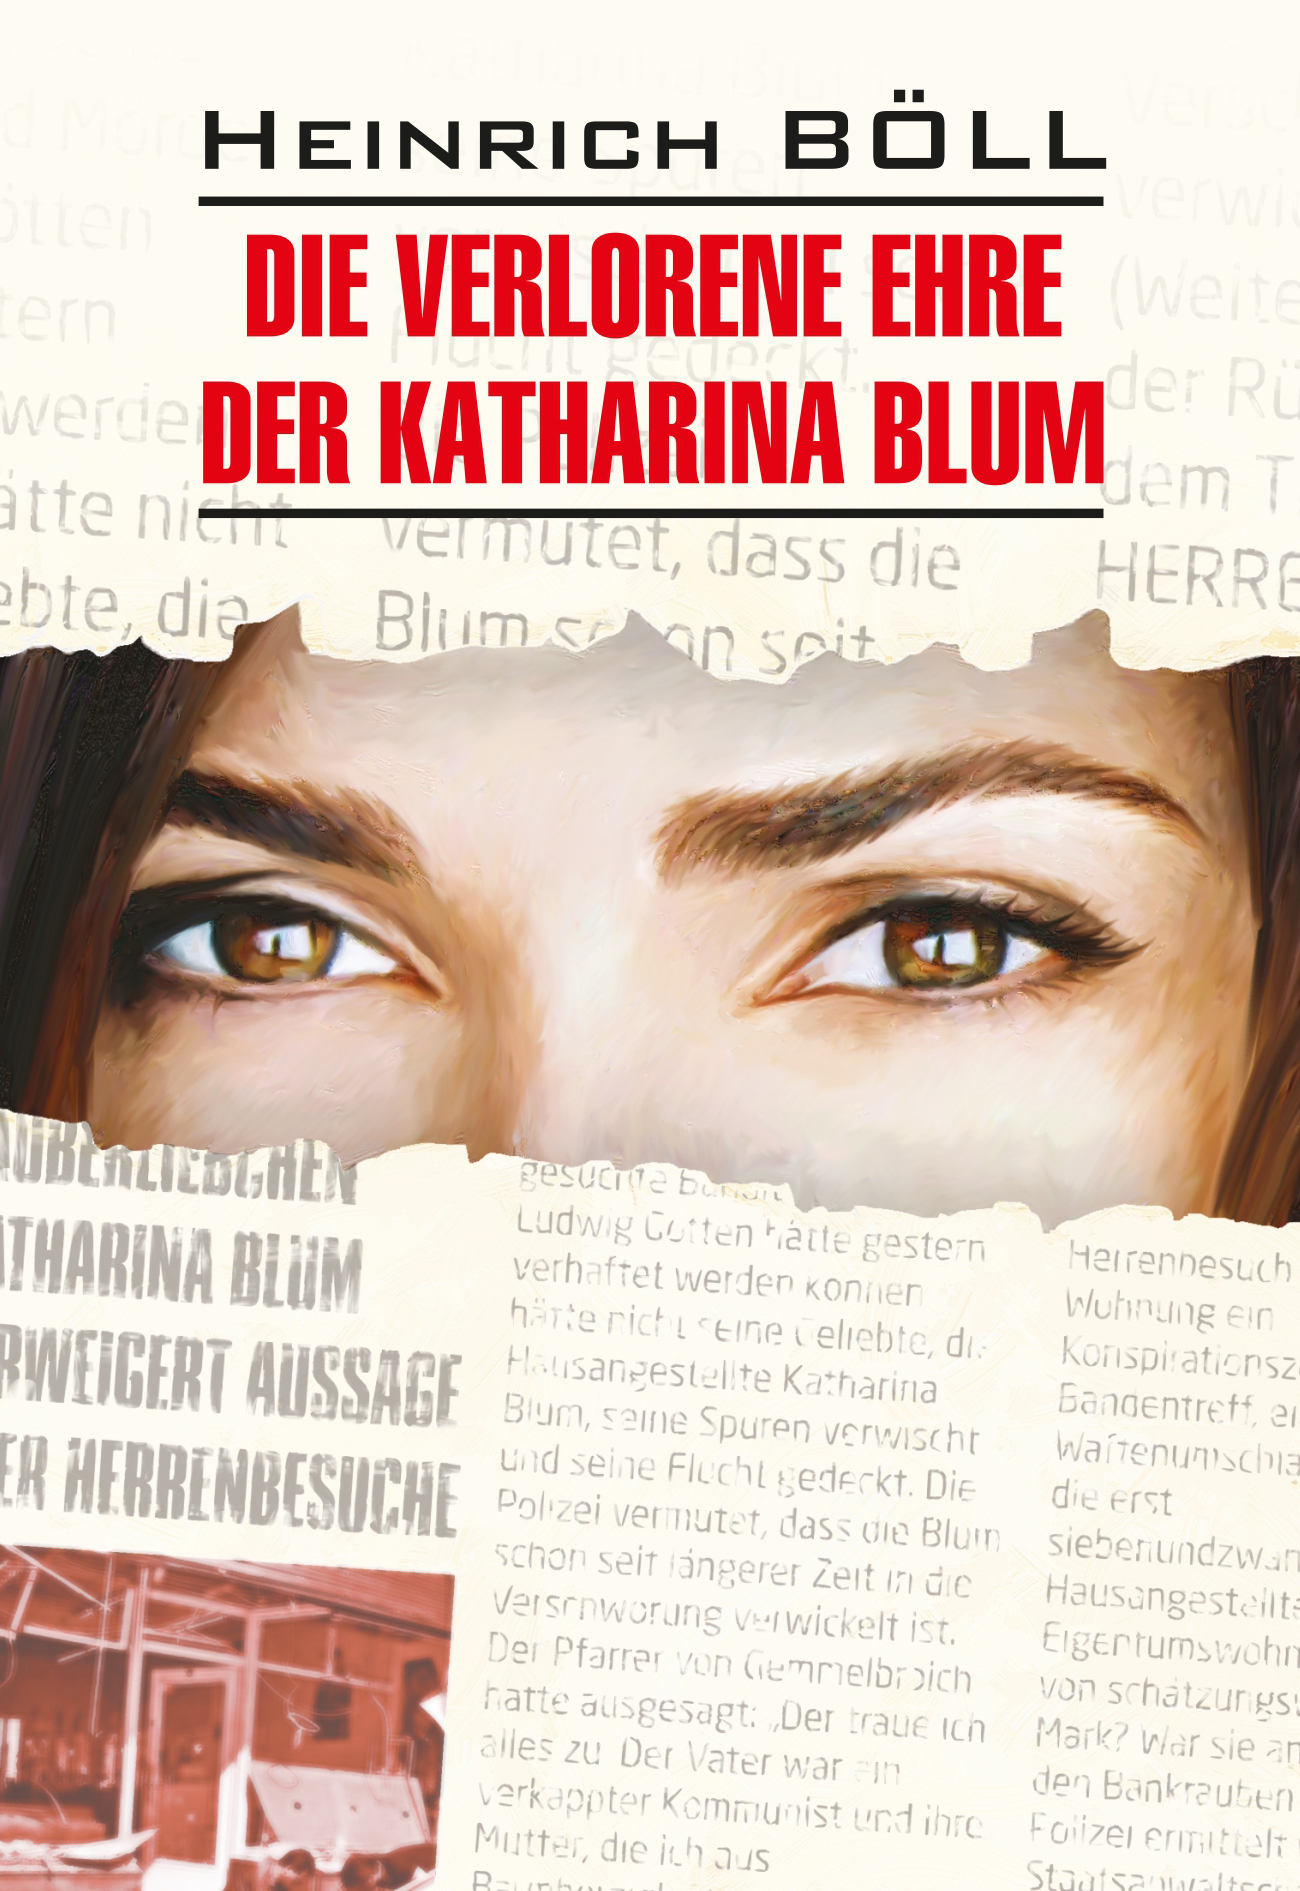 Die verlorene ehre der Katharina blum /Потерянная честь Катарины Блюм. Книга для чтения на немецком языке